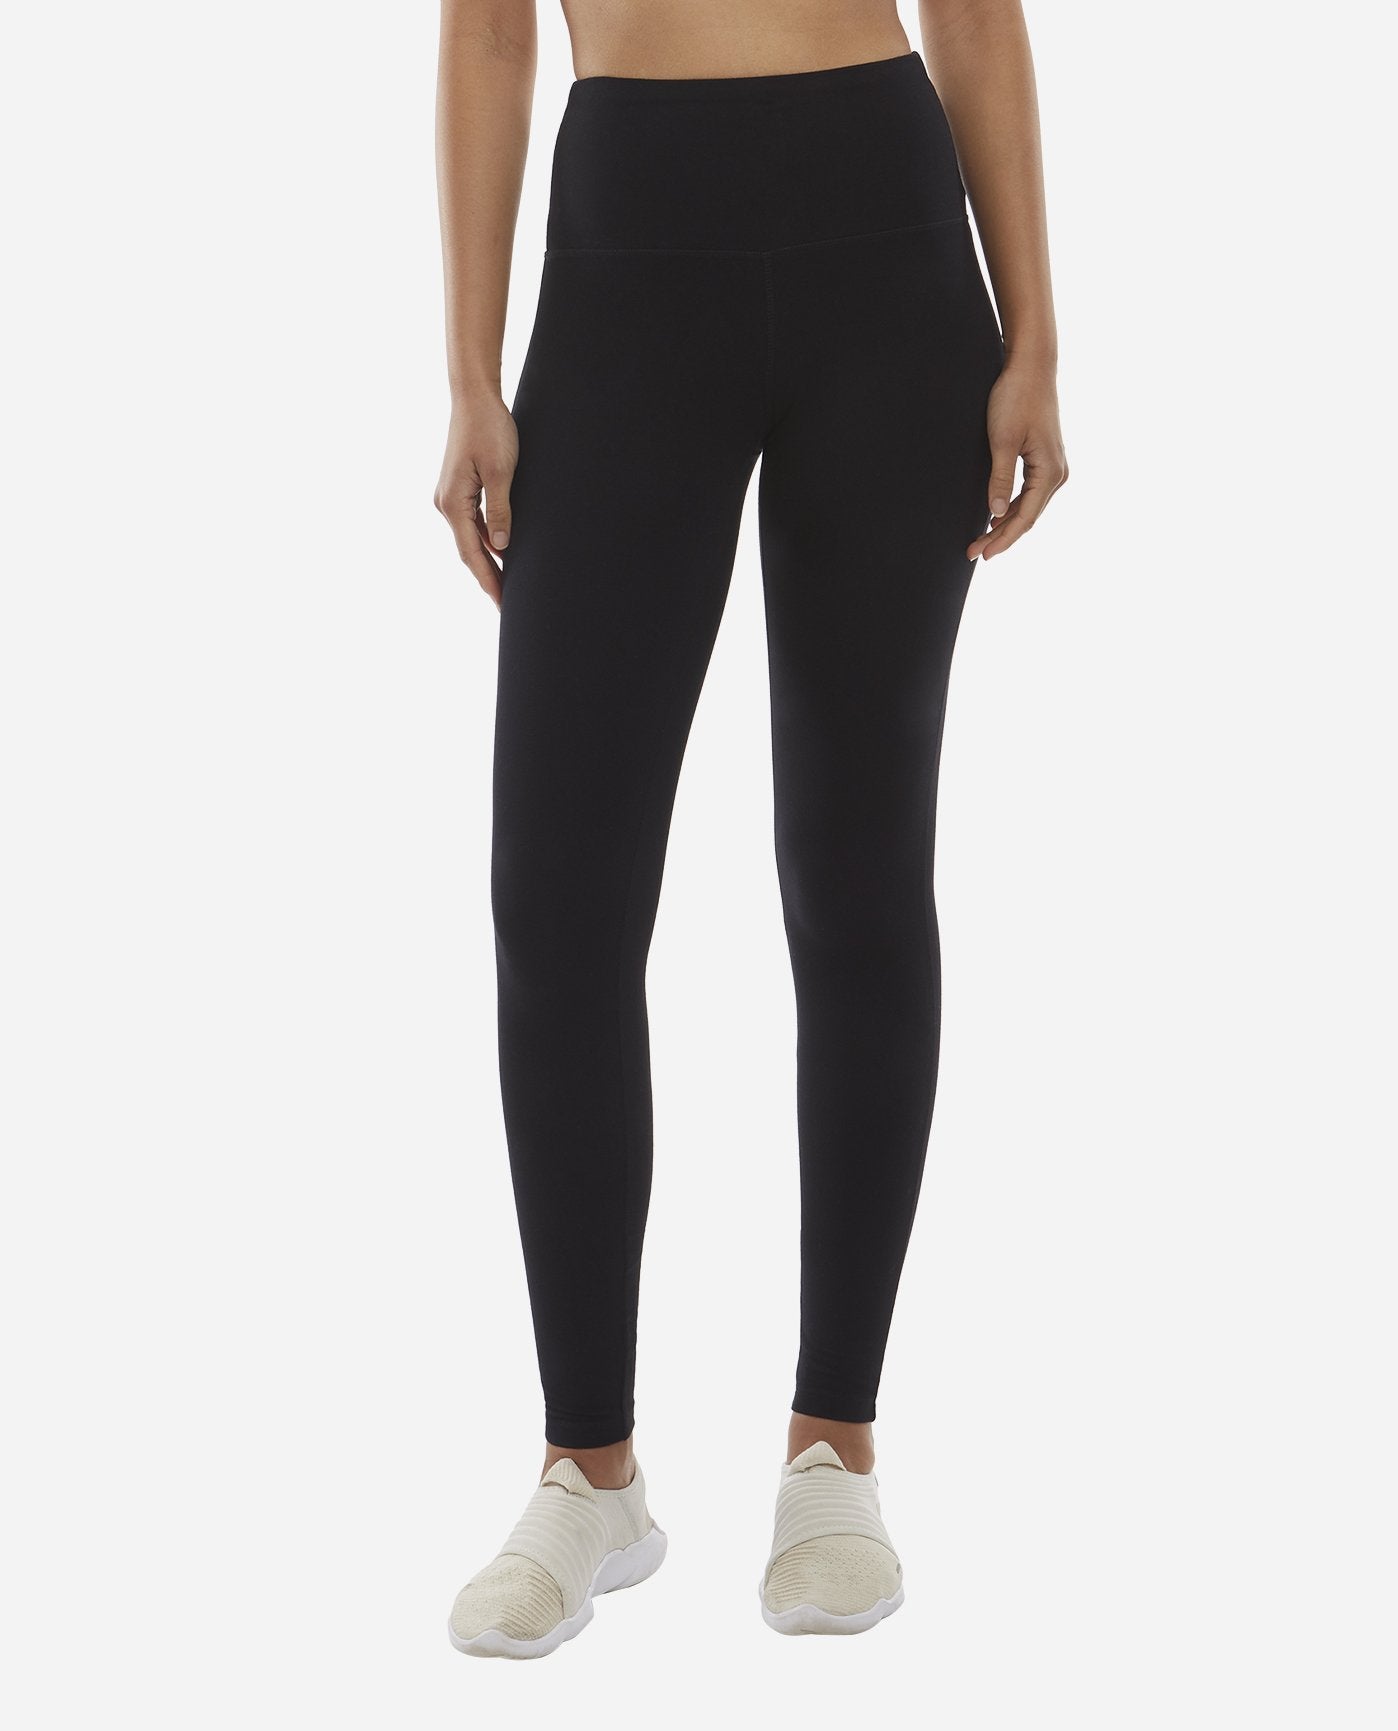 Danskin Women's Essential Sleek Fit Crop Pant, Black, Small at Amazon  Women's Clothing store: Athletic Pants